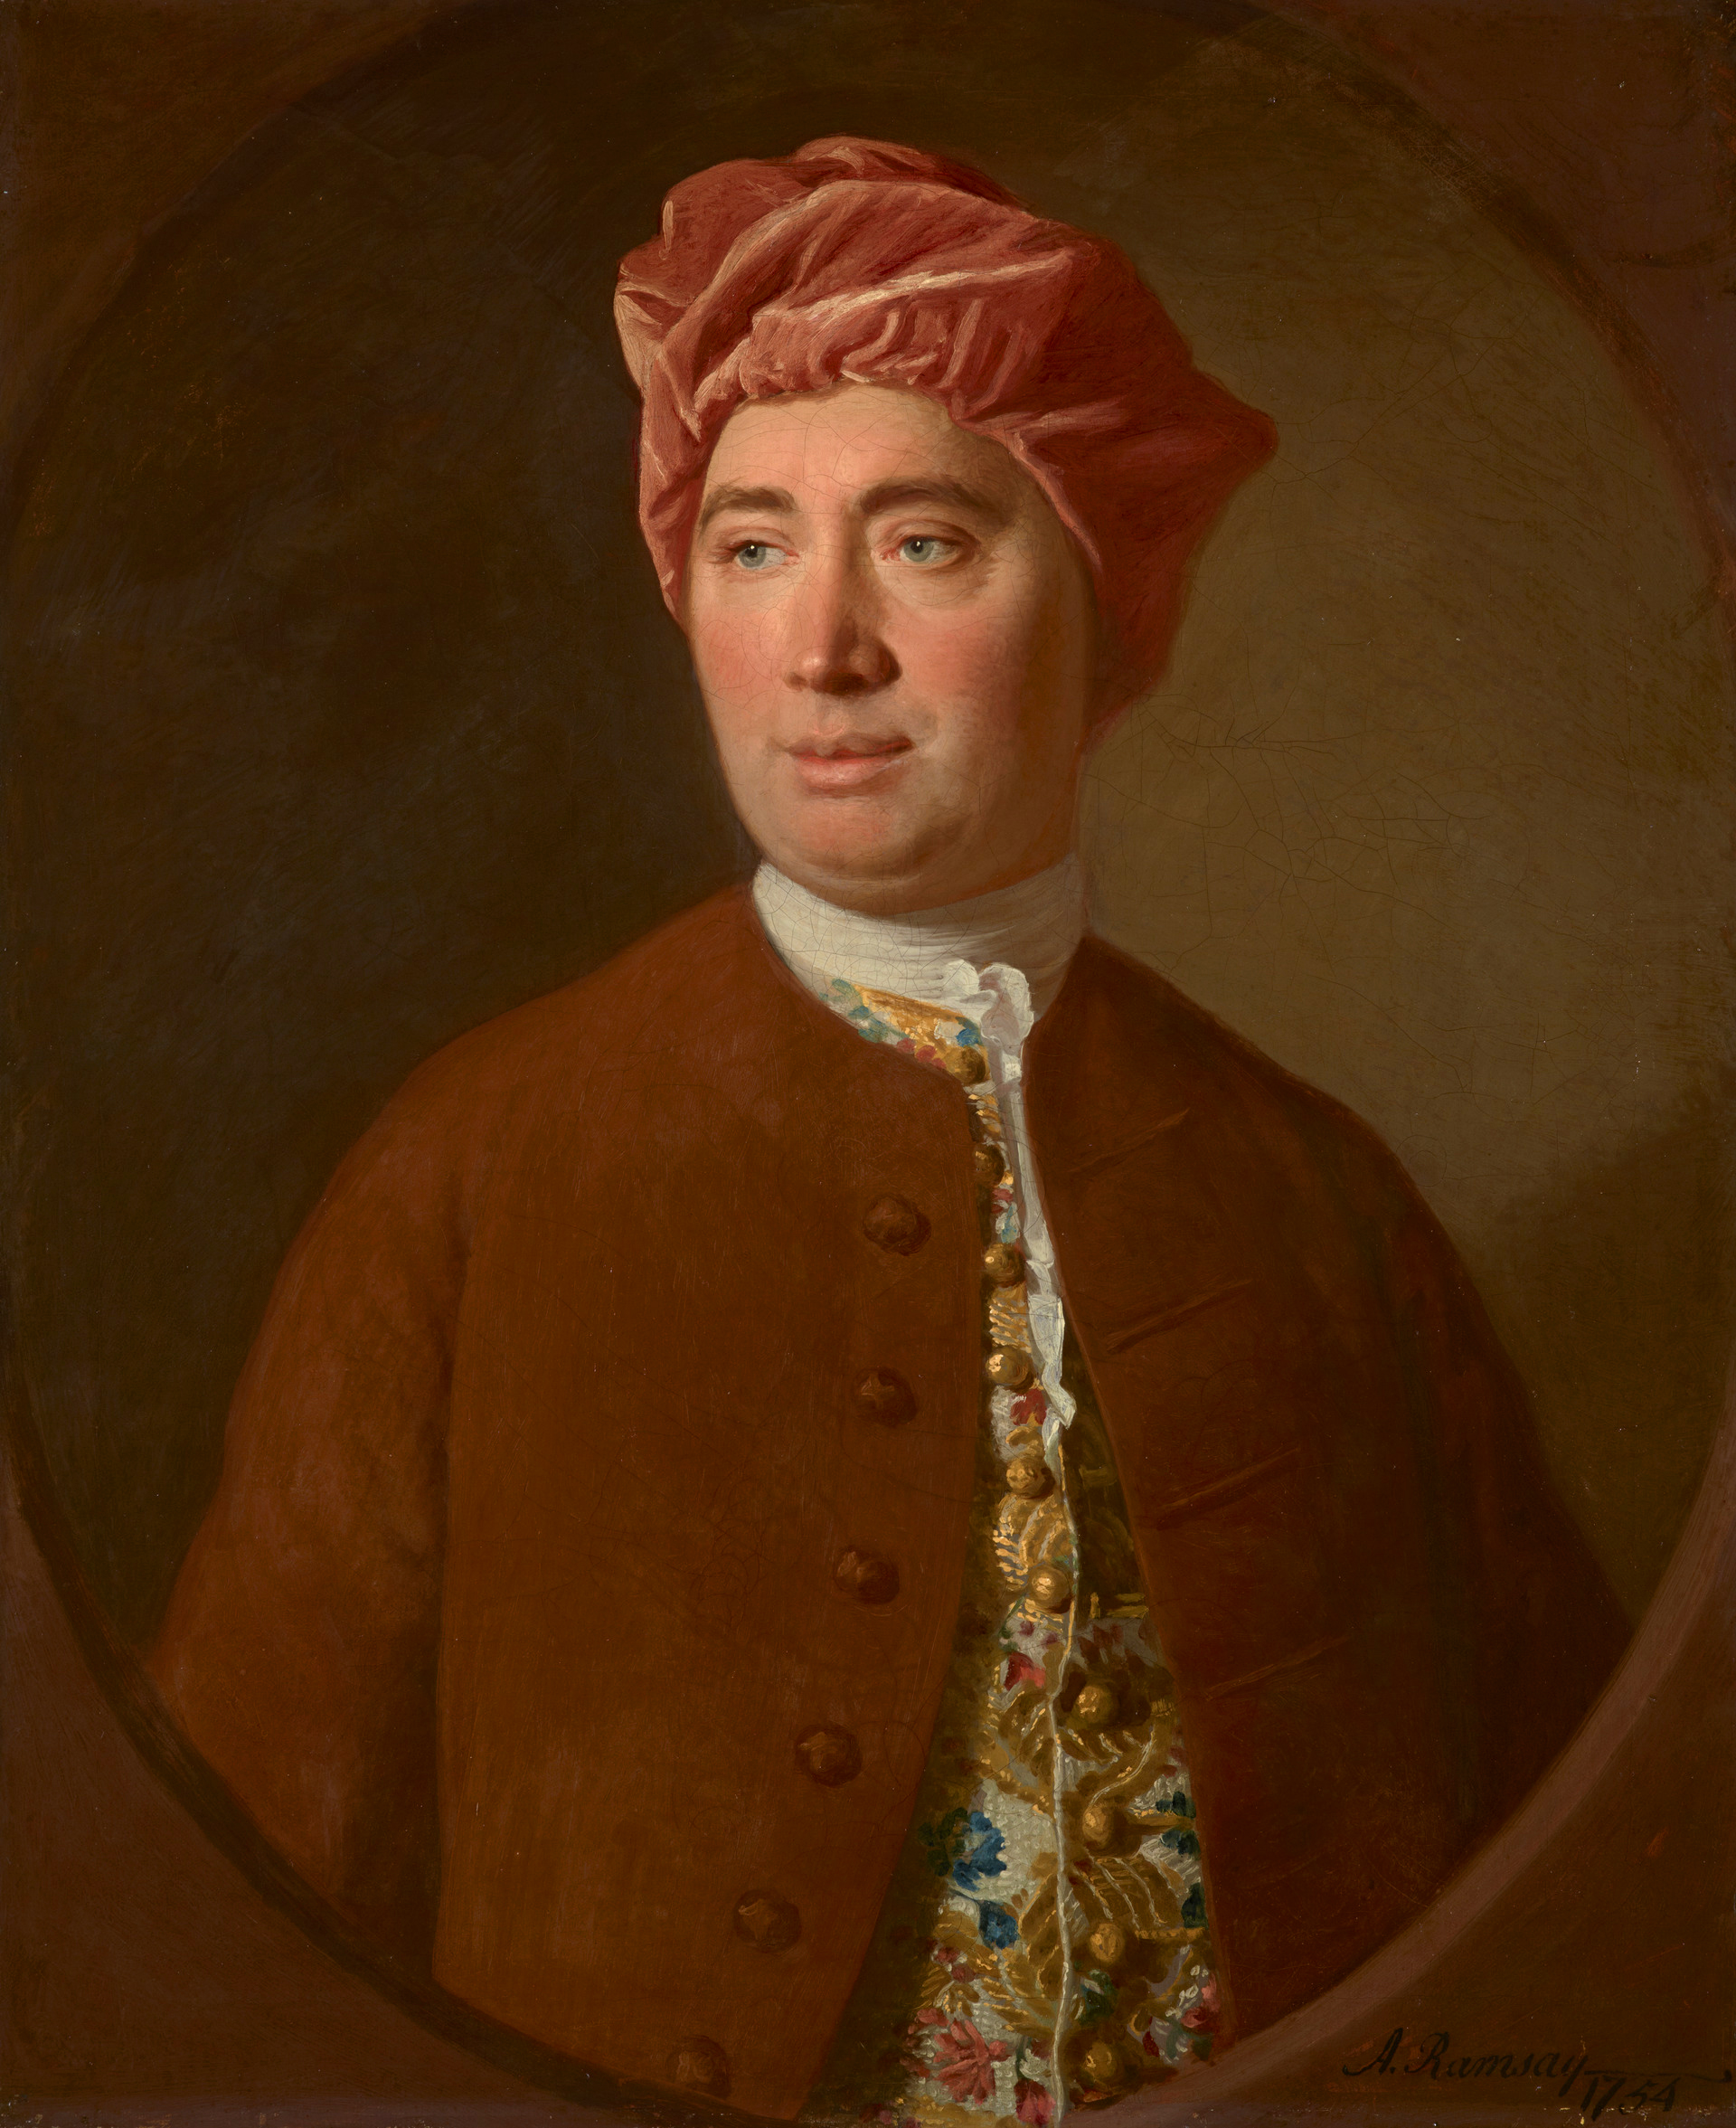 ''David Hume'' by [[Allan Ramsay (artist)|Allan Ramsay]], 1754